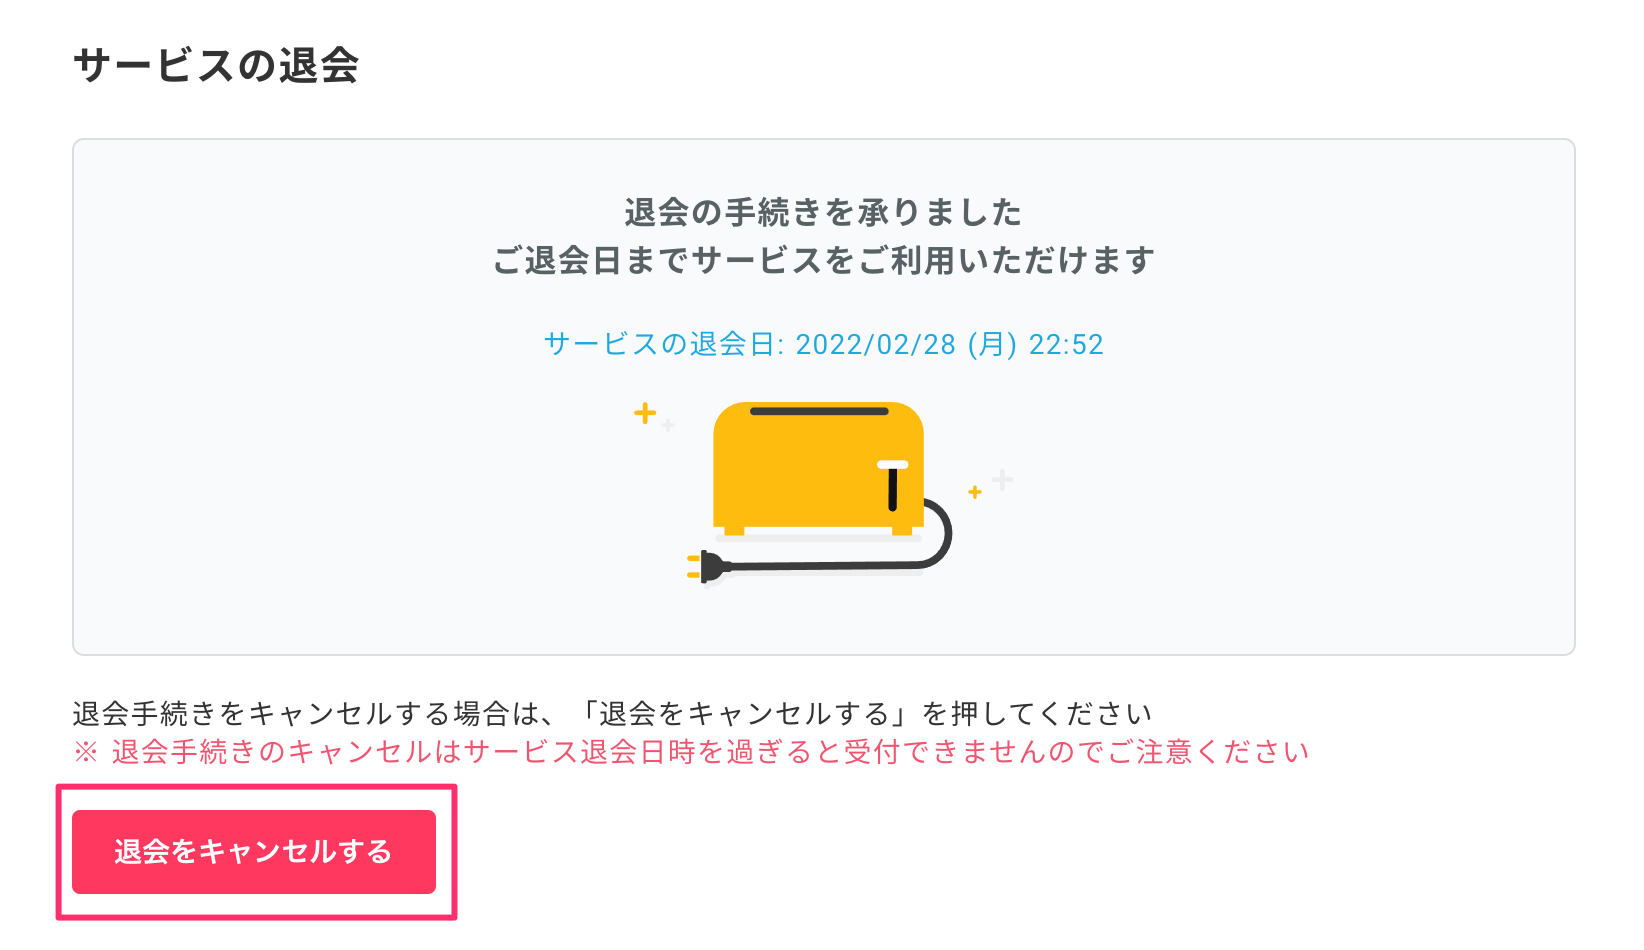 toaster_team_トースターチーム｜マニュアル＆ナレッジ管理アプリ.png